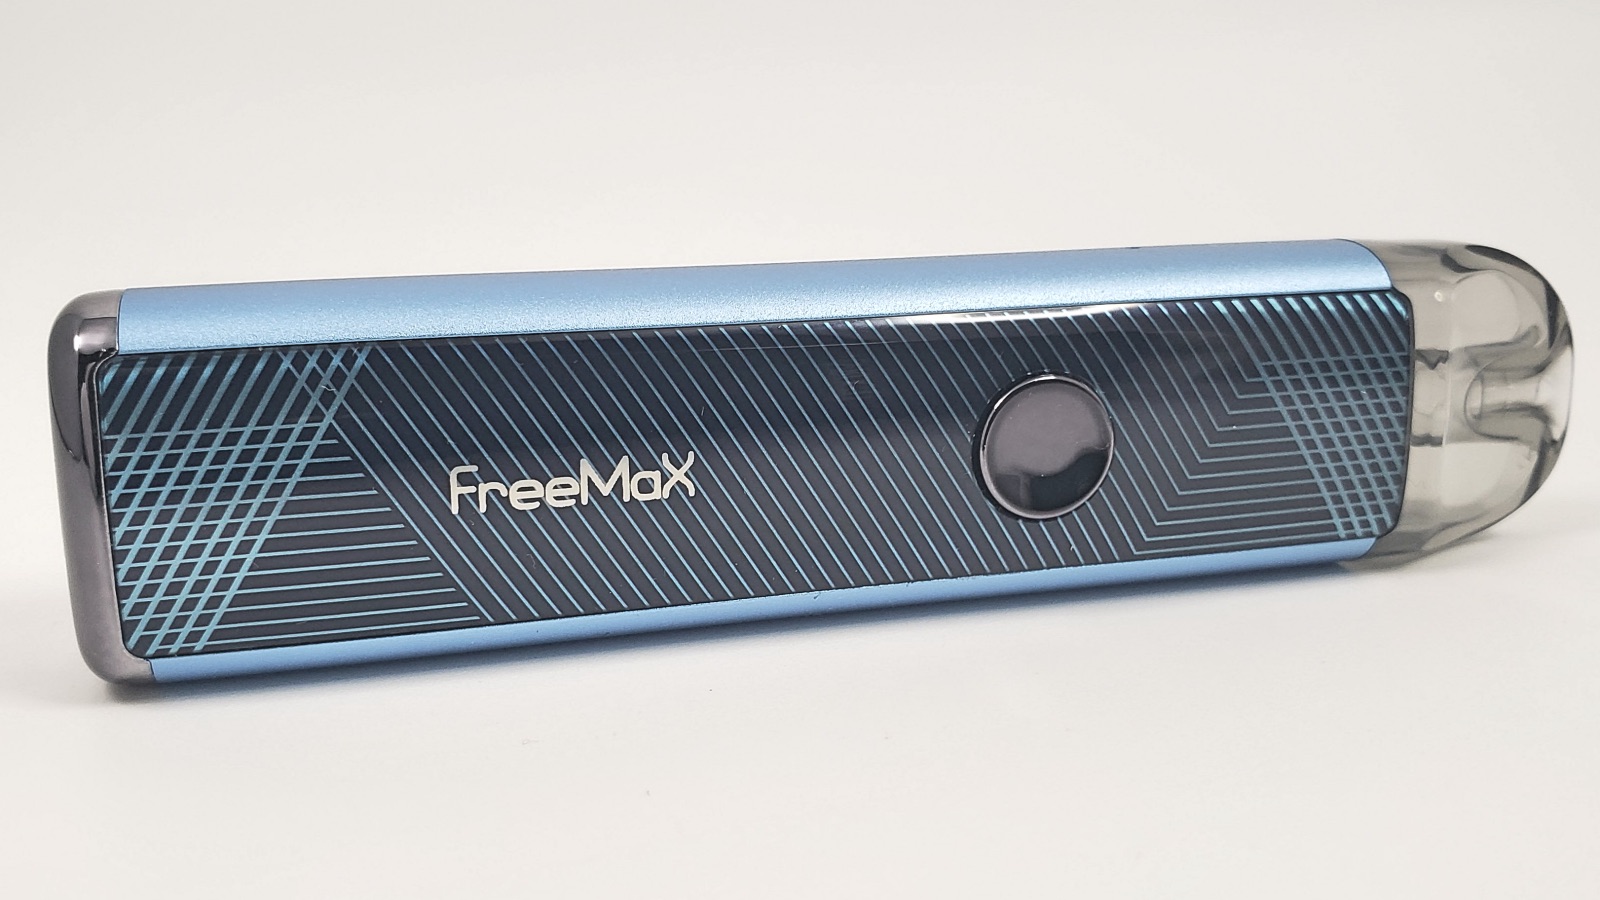 Freemax Onnix 2 laying on its side